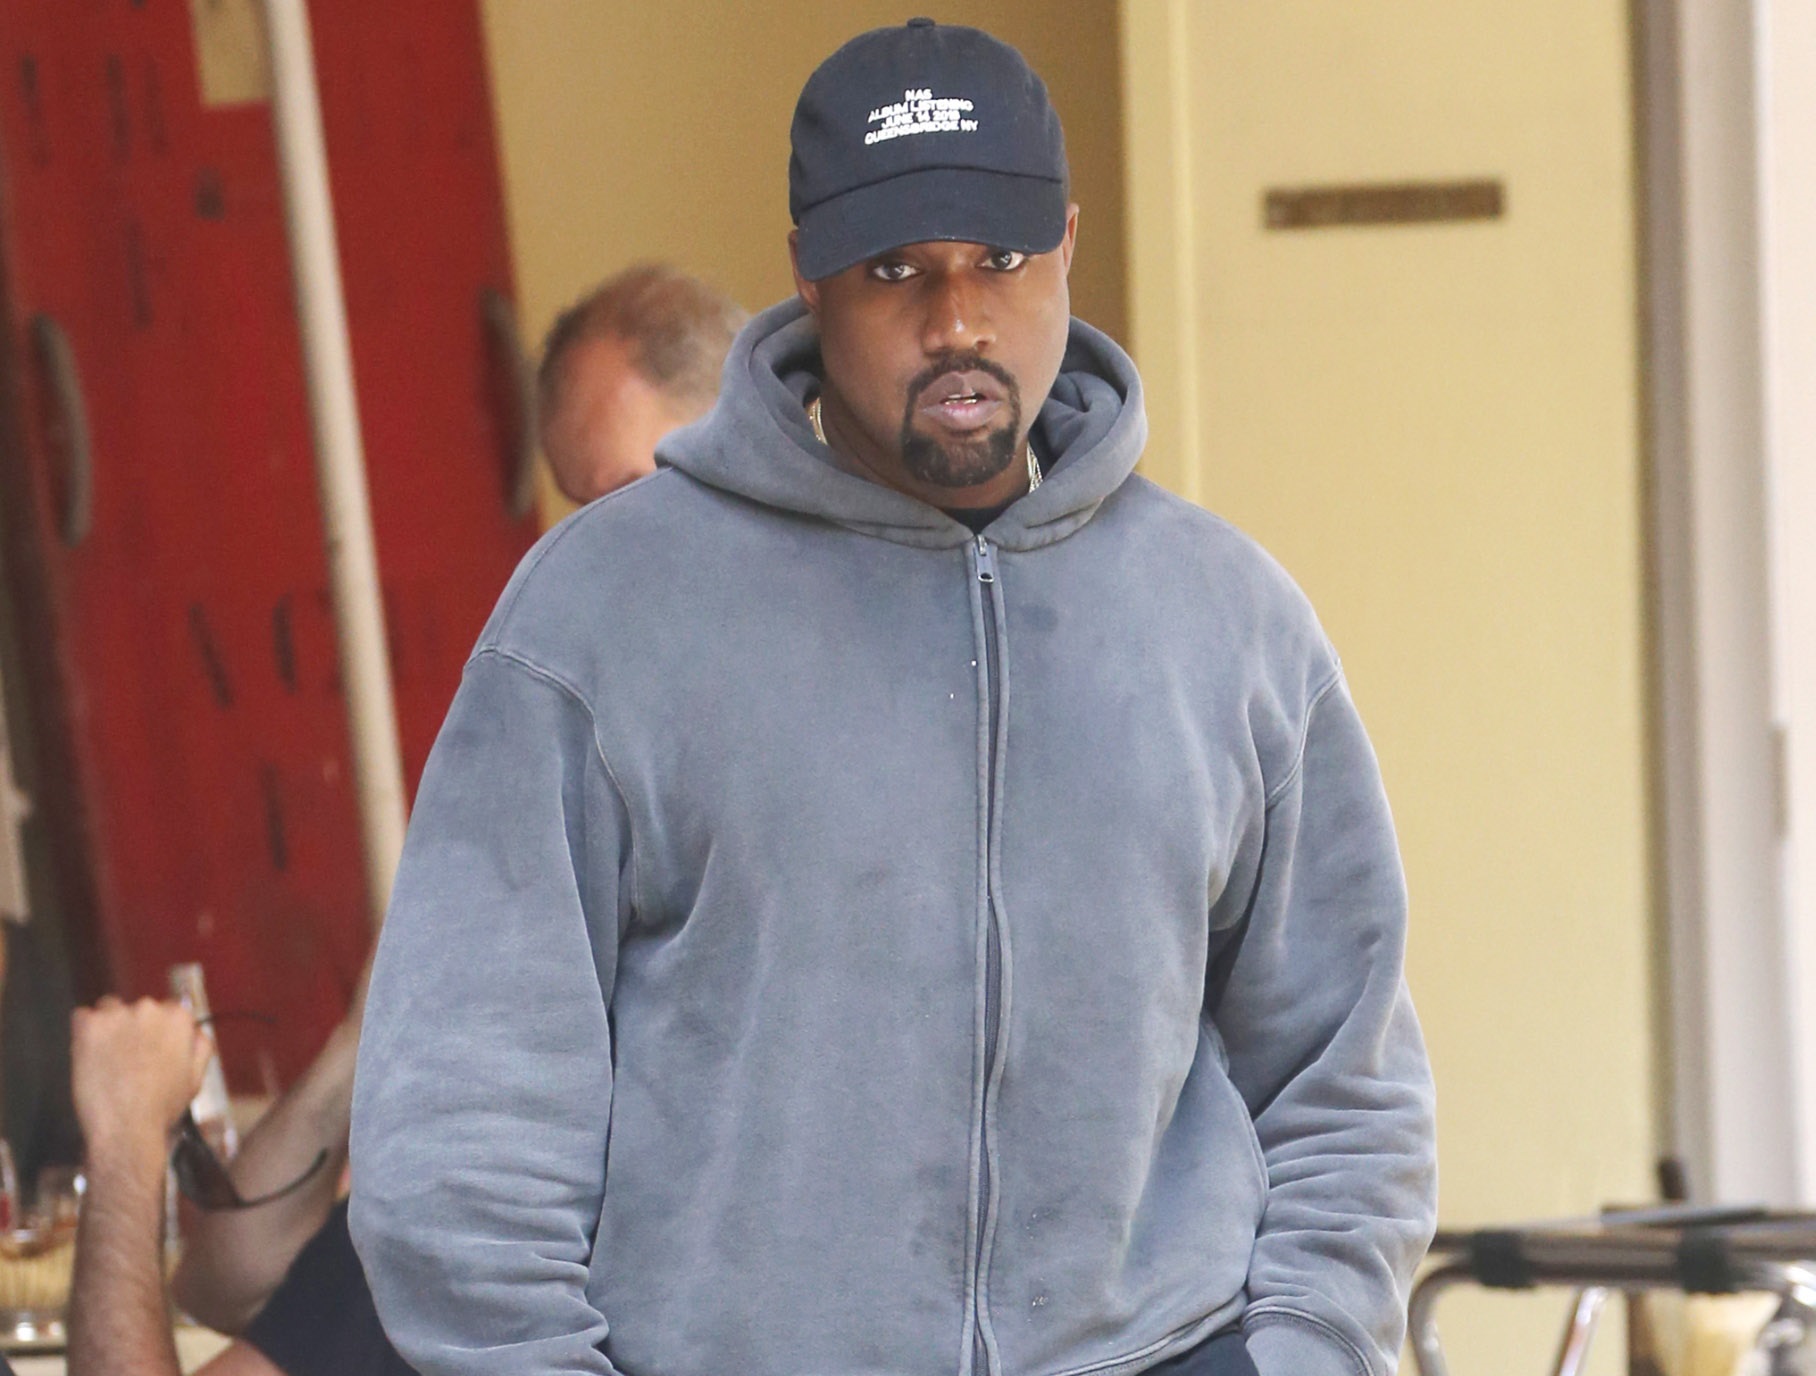 Kanye West Wearing Yeezy Slides to 2 Chainz's Wedding